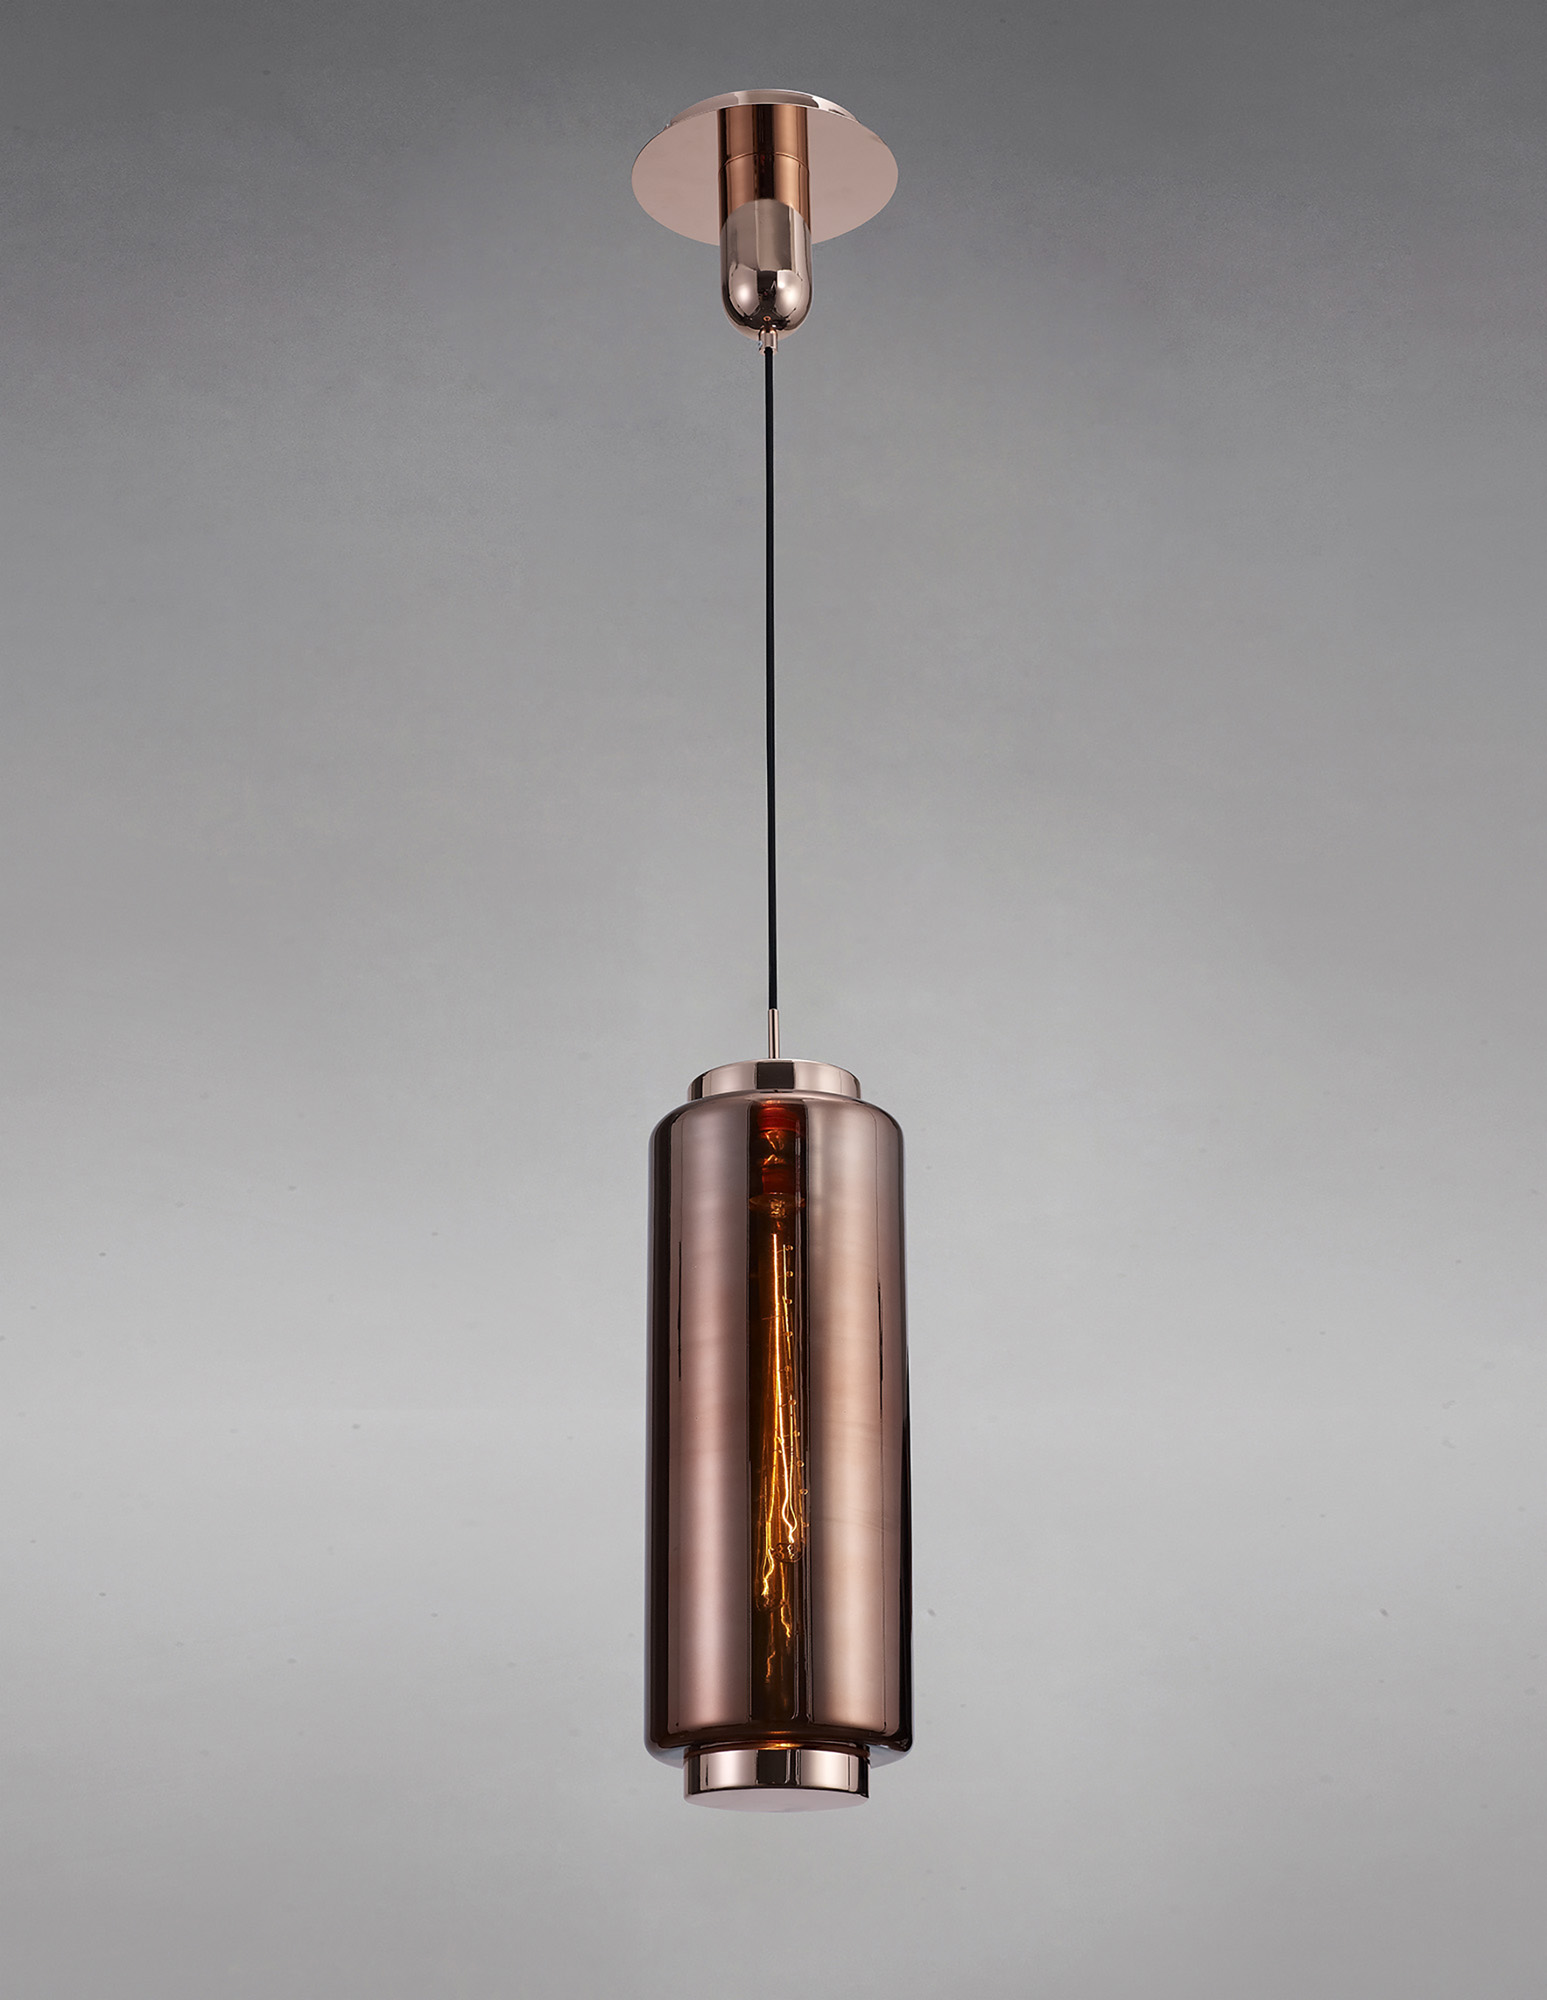 Jarras Copper Ceiling Lights Mantra Single Pendant